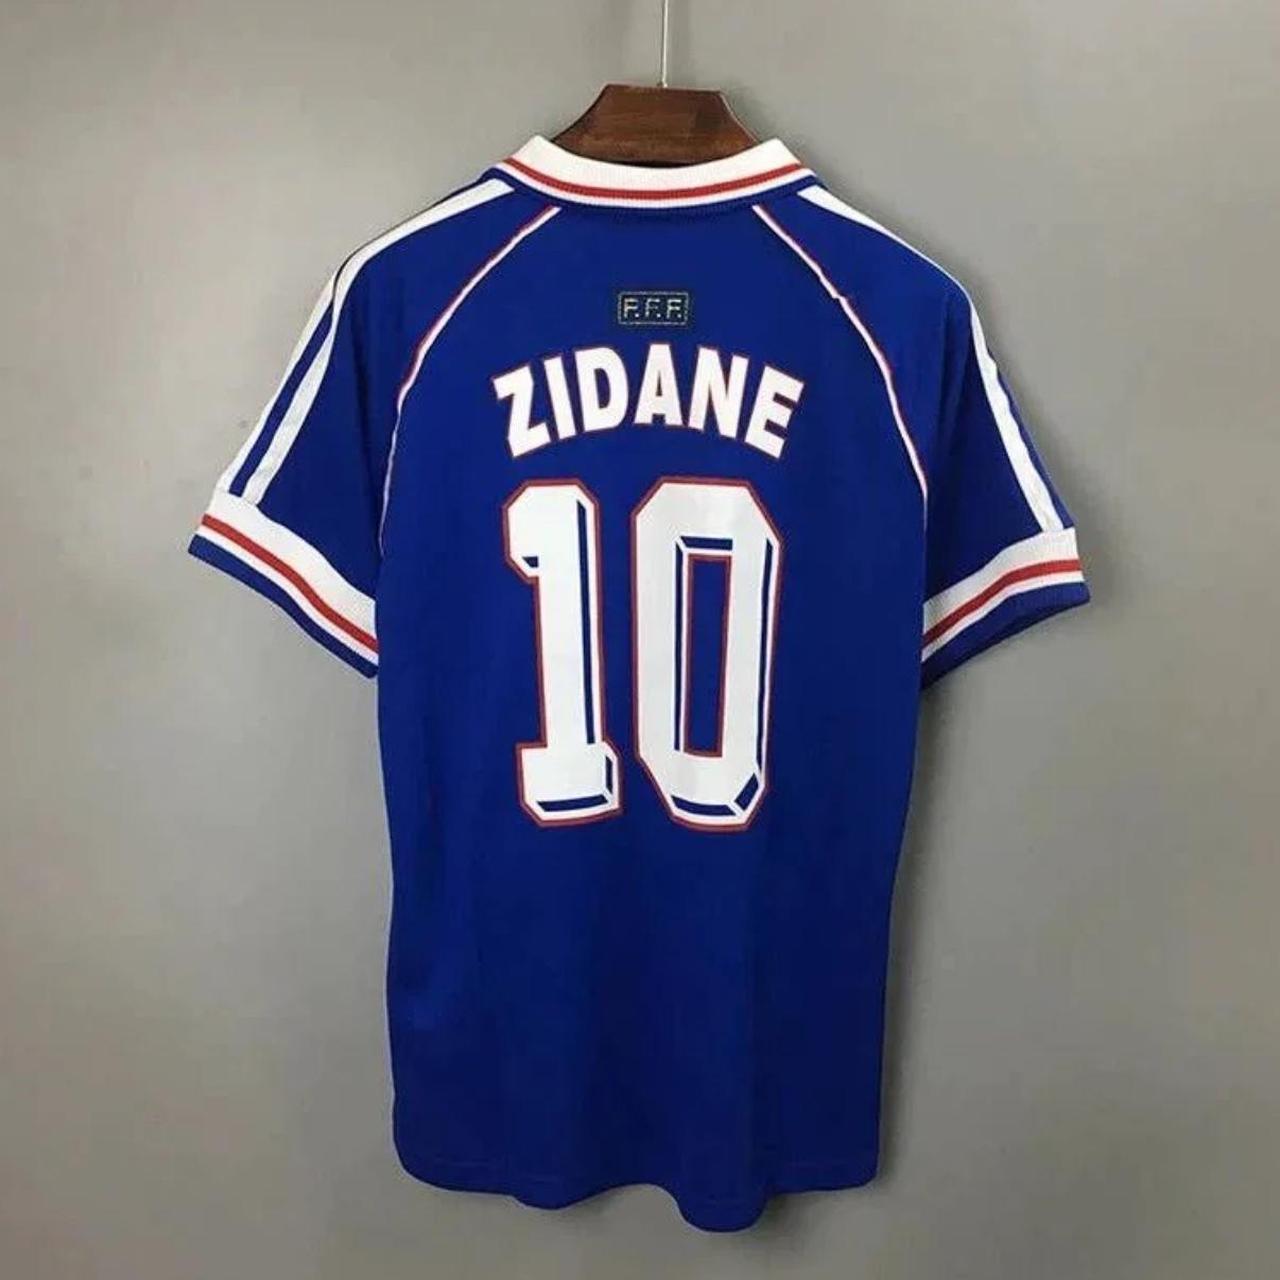 Zidane 10, France 1998 Retro jersey Sizes Small,... - Depop